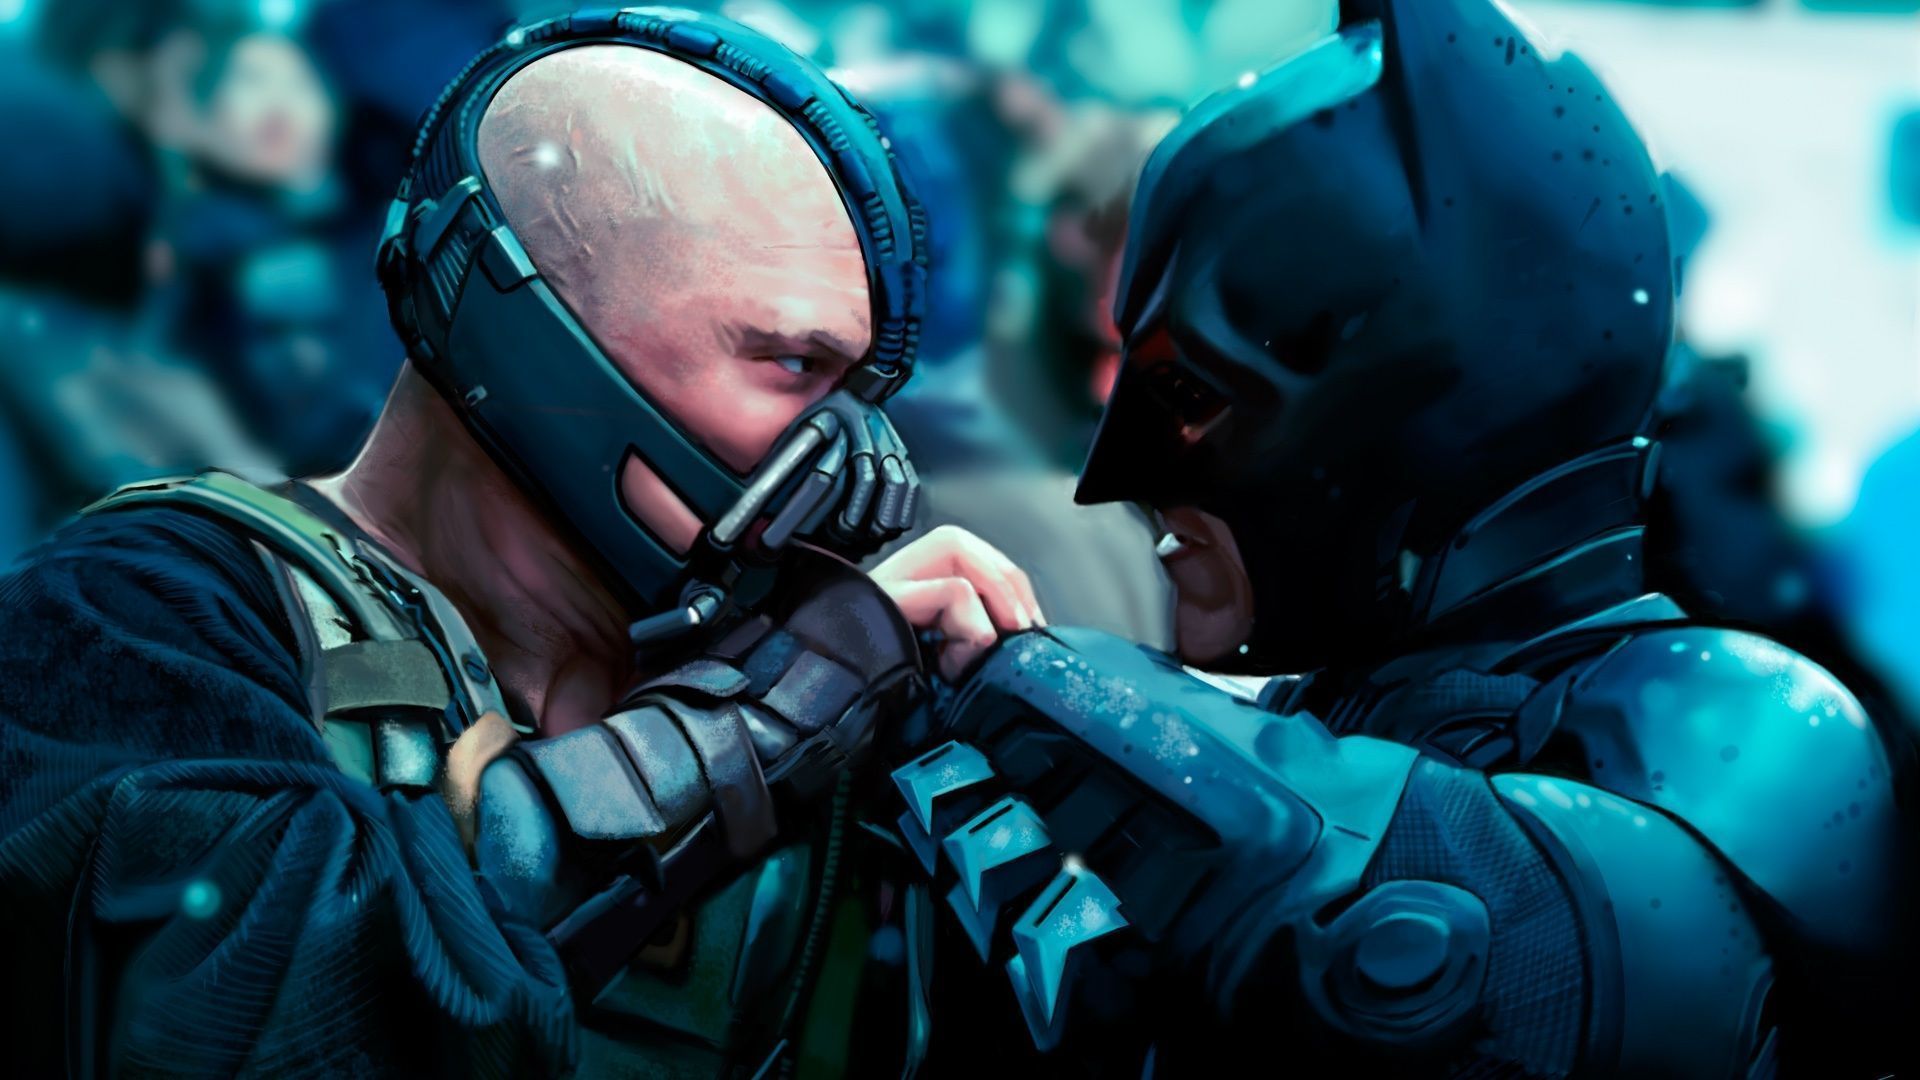 Bane fights Batman in The Dark Knight Rises